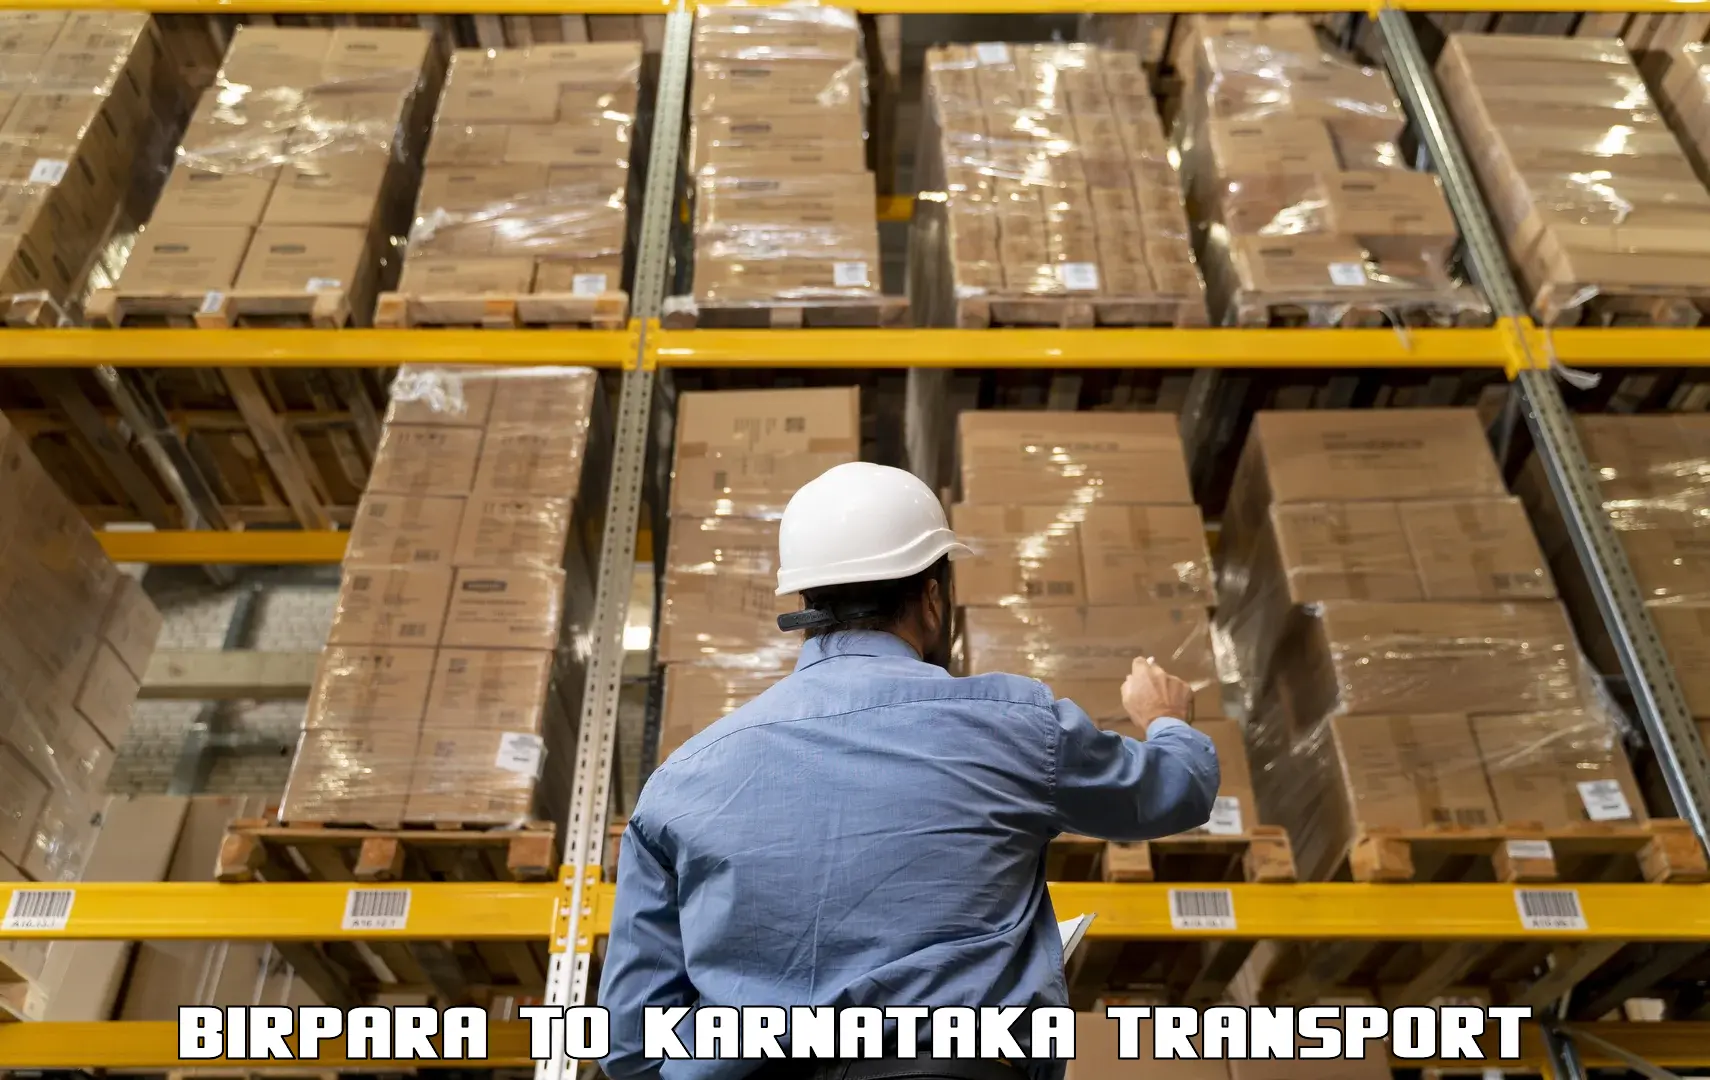 Transport shared services Birpara to Karnataka